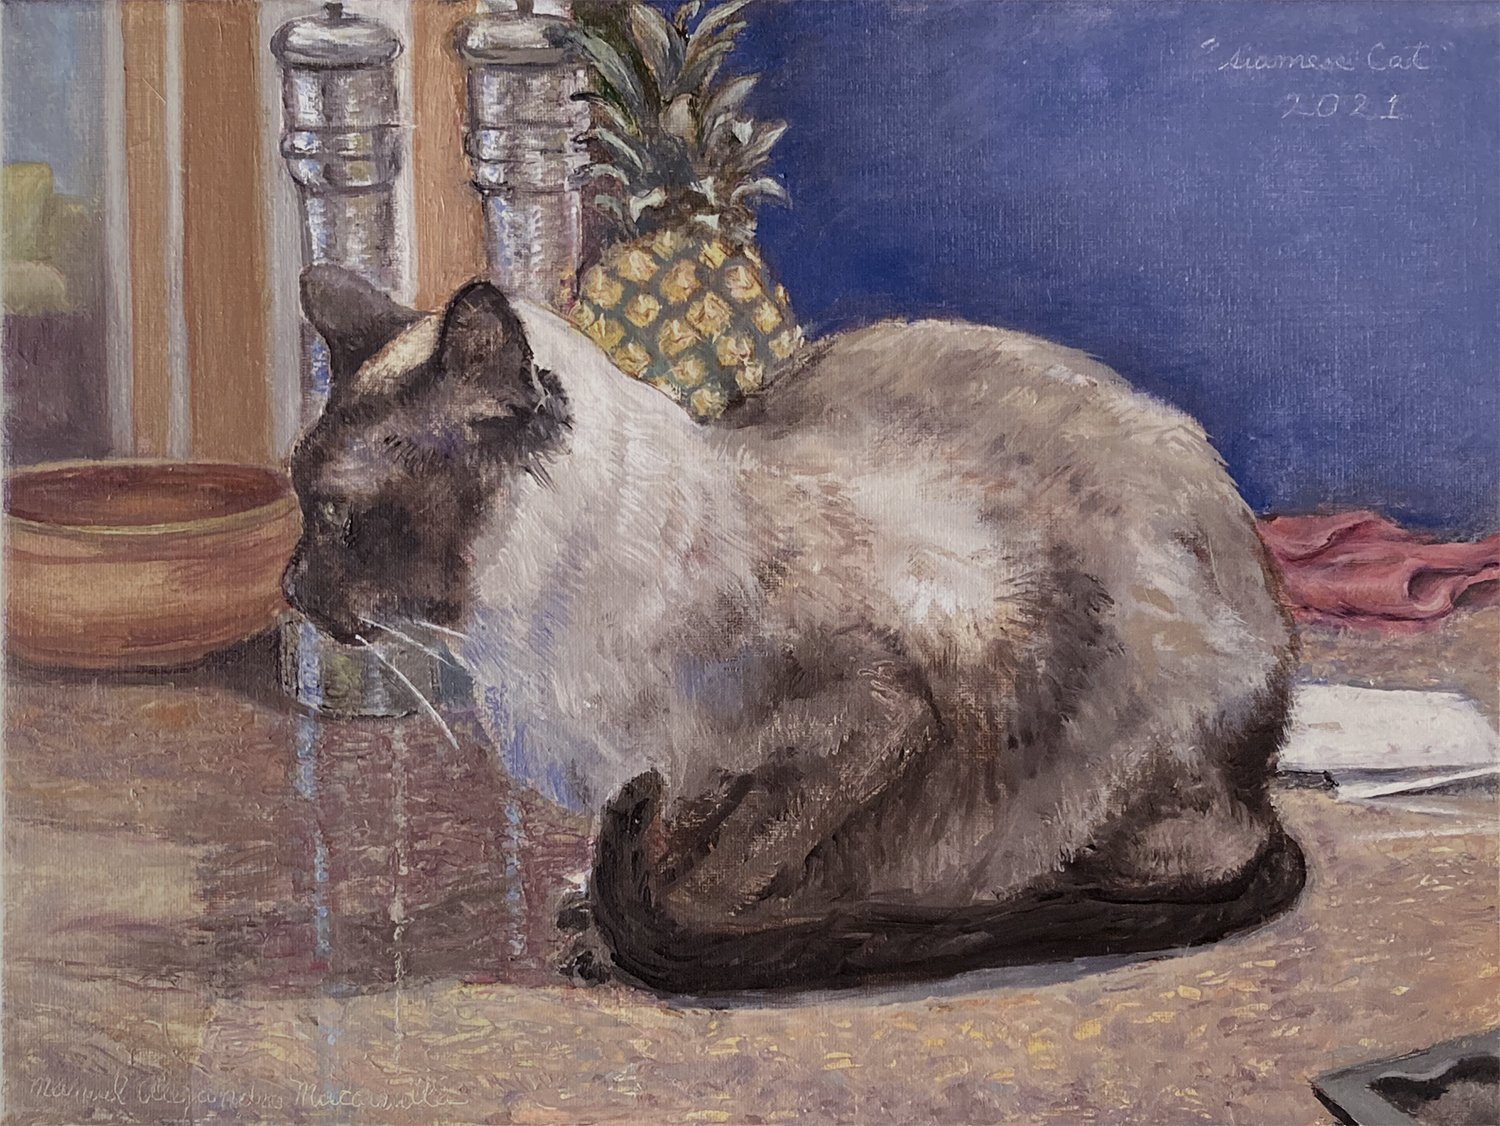    Siamese cat,   2021. Oil on canvas. 12” X 16”. 